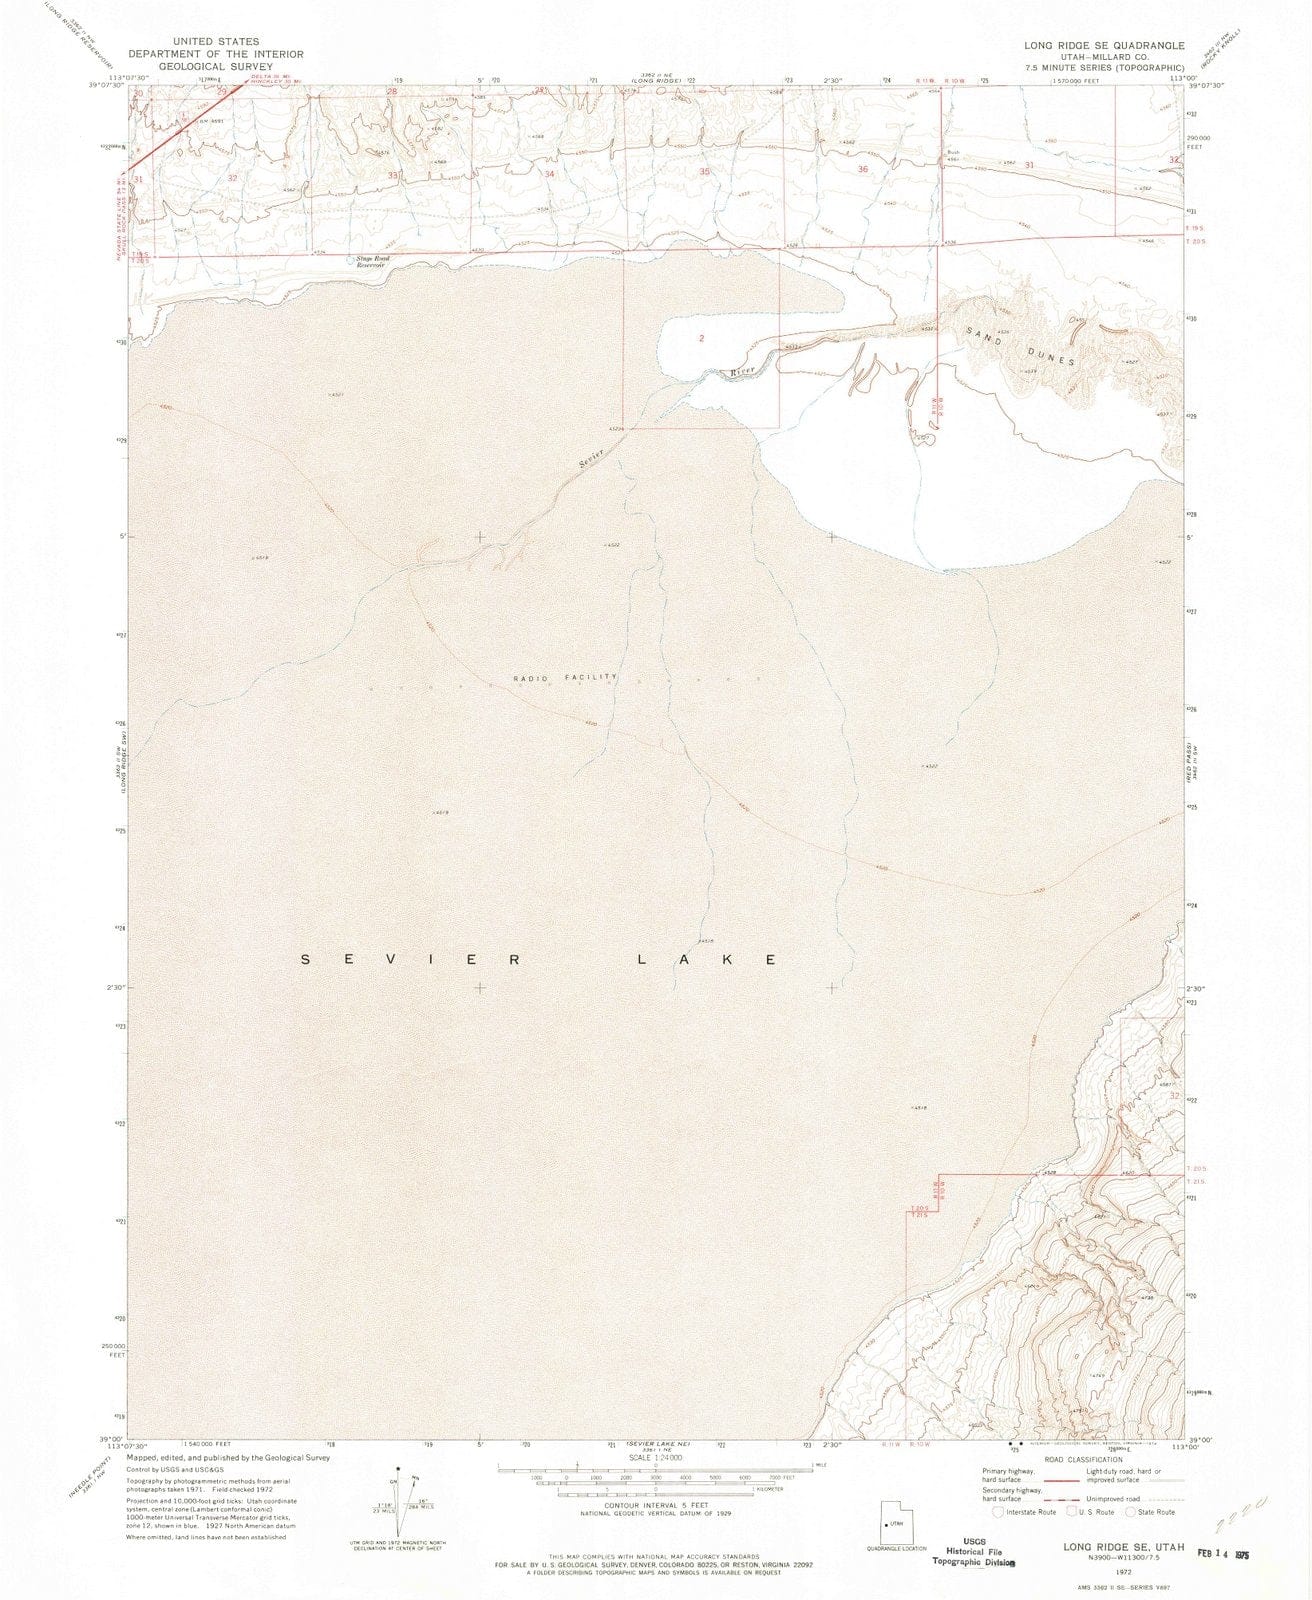 1972 Long Ridge, UT - Utah - USGS Topographic Map